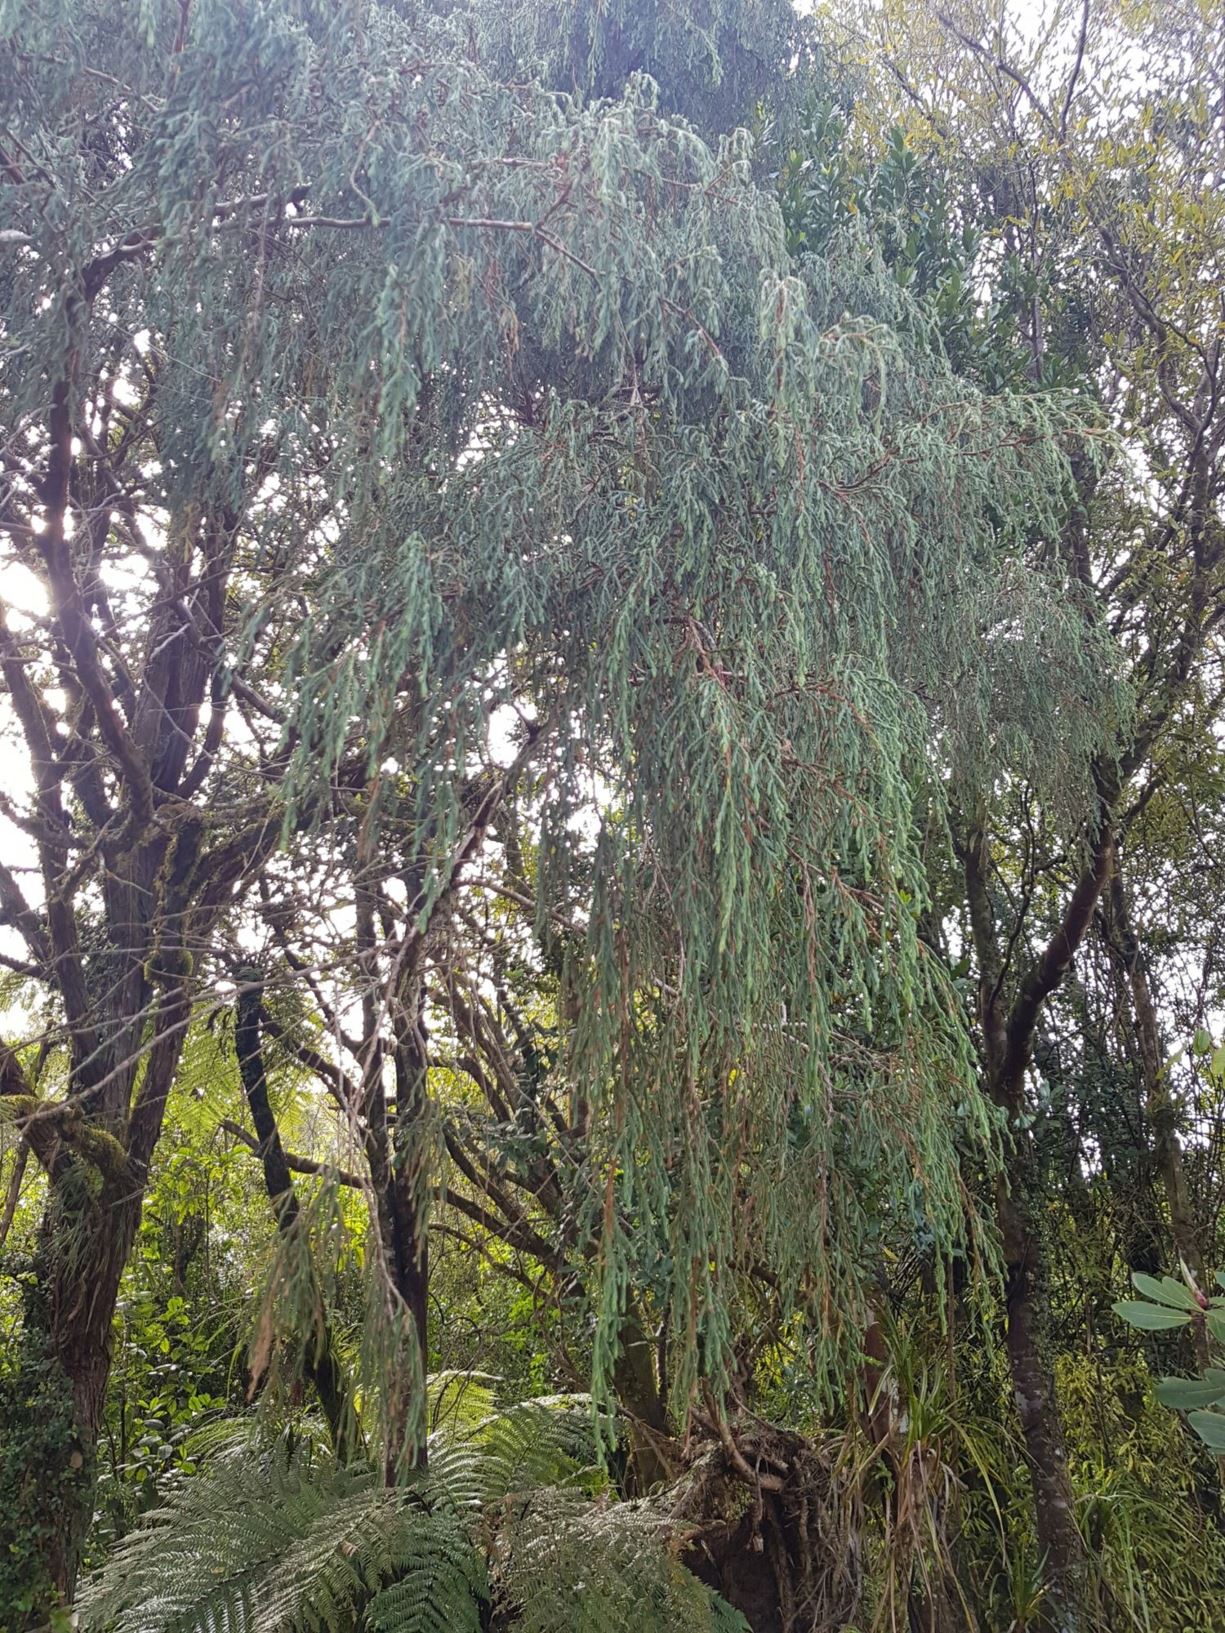 Juniperus recurva var. coxii - Drooping Juniper